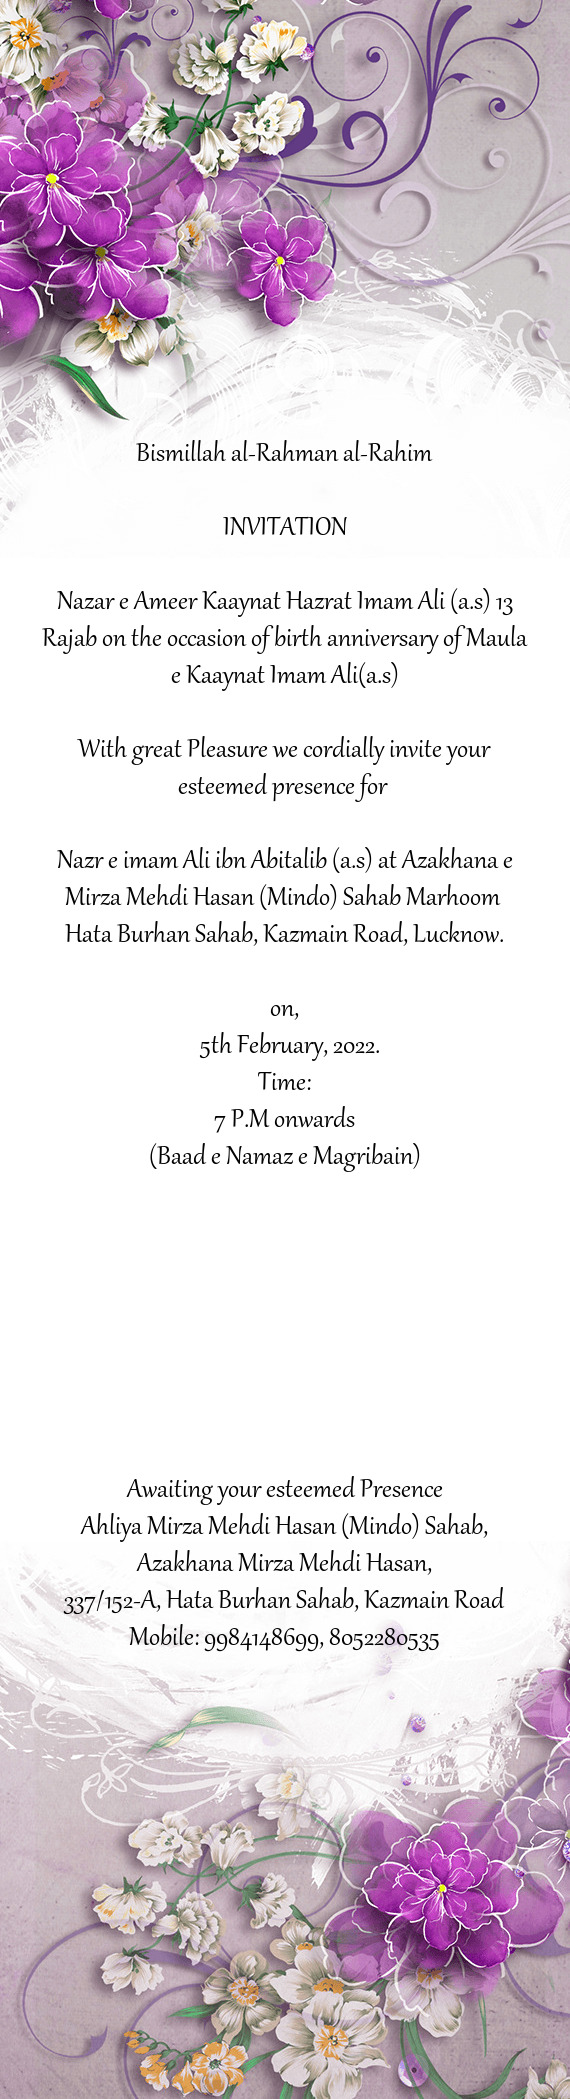 Nazar e Ameer Kaaynat Hazrat Imam Ali (a.s) 13 Rajab on the occasion of birth anniversary of Maula e